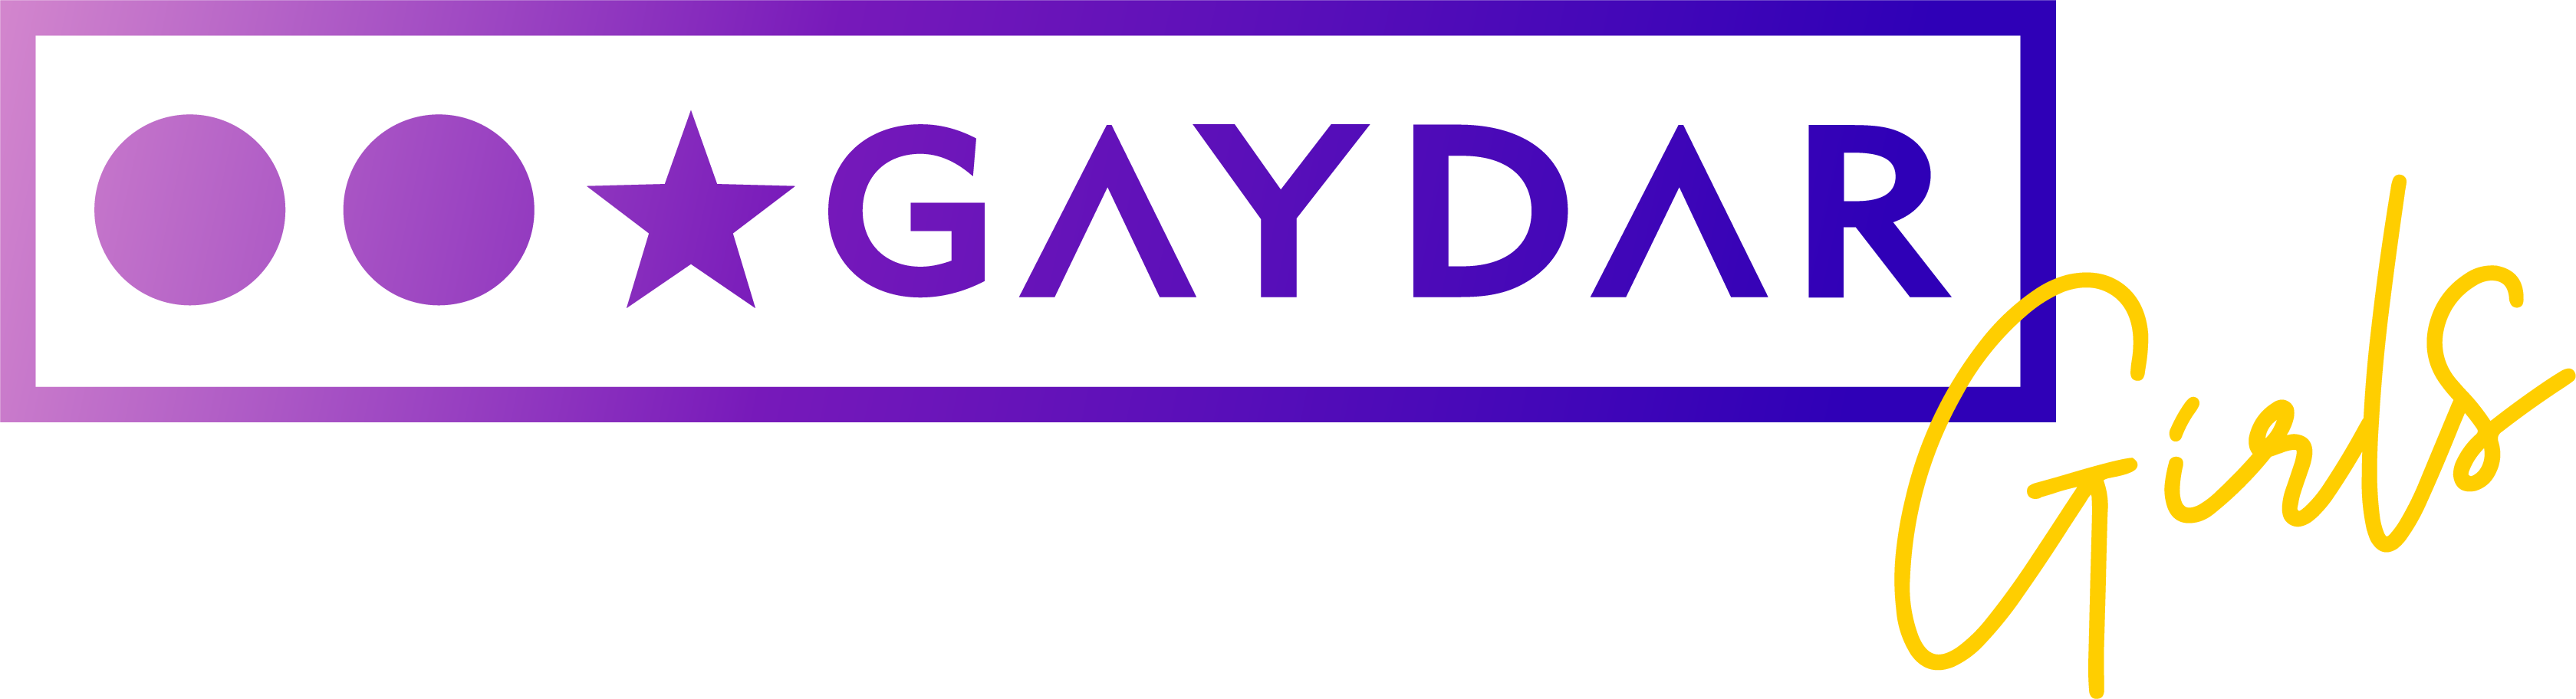 Gaydar Girls